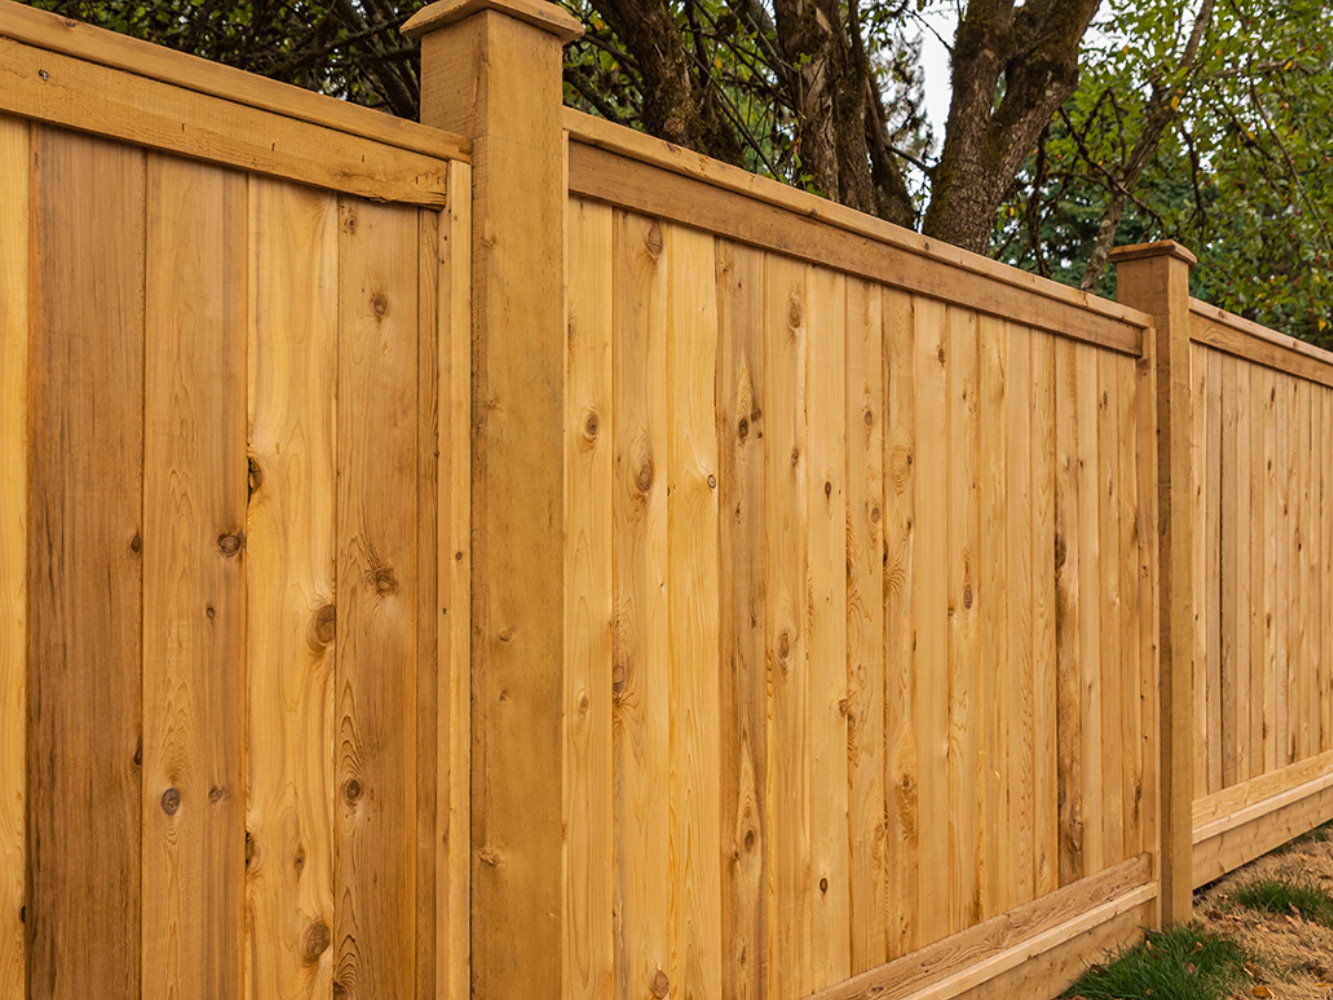 Vidalia GA cap and trim style wood fence